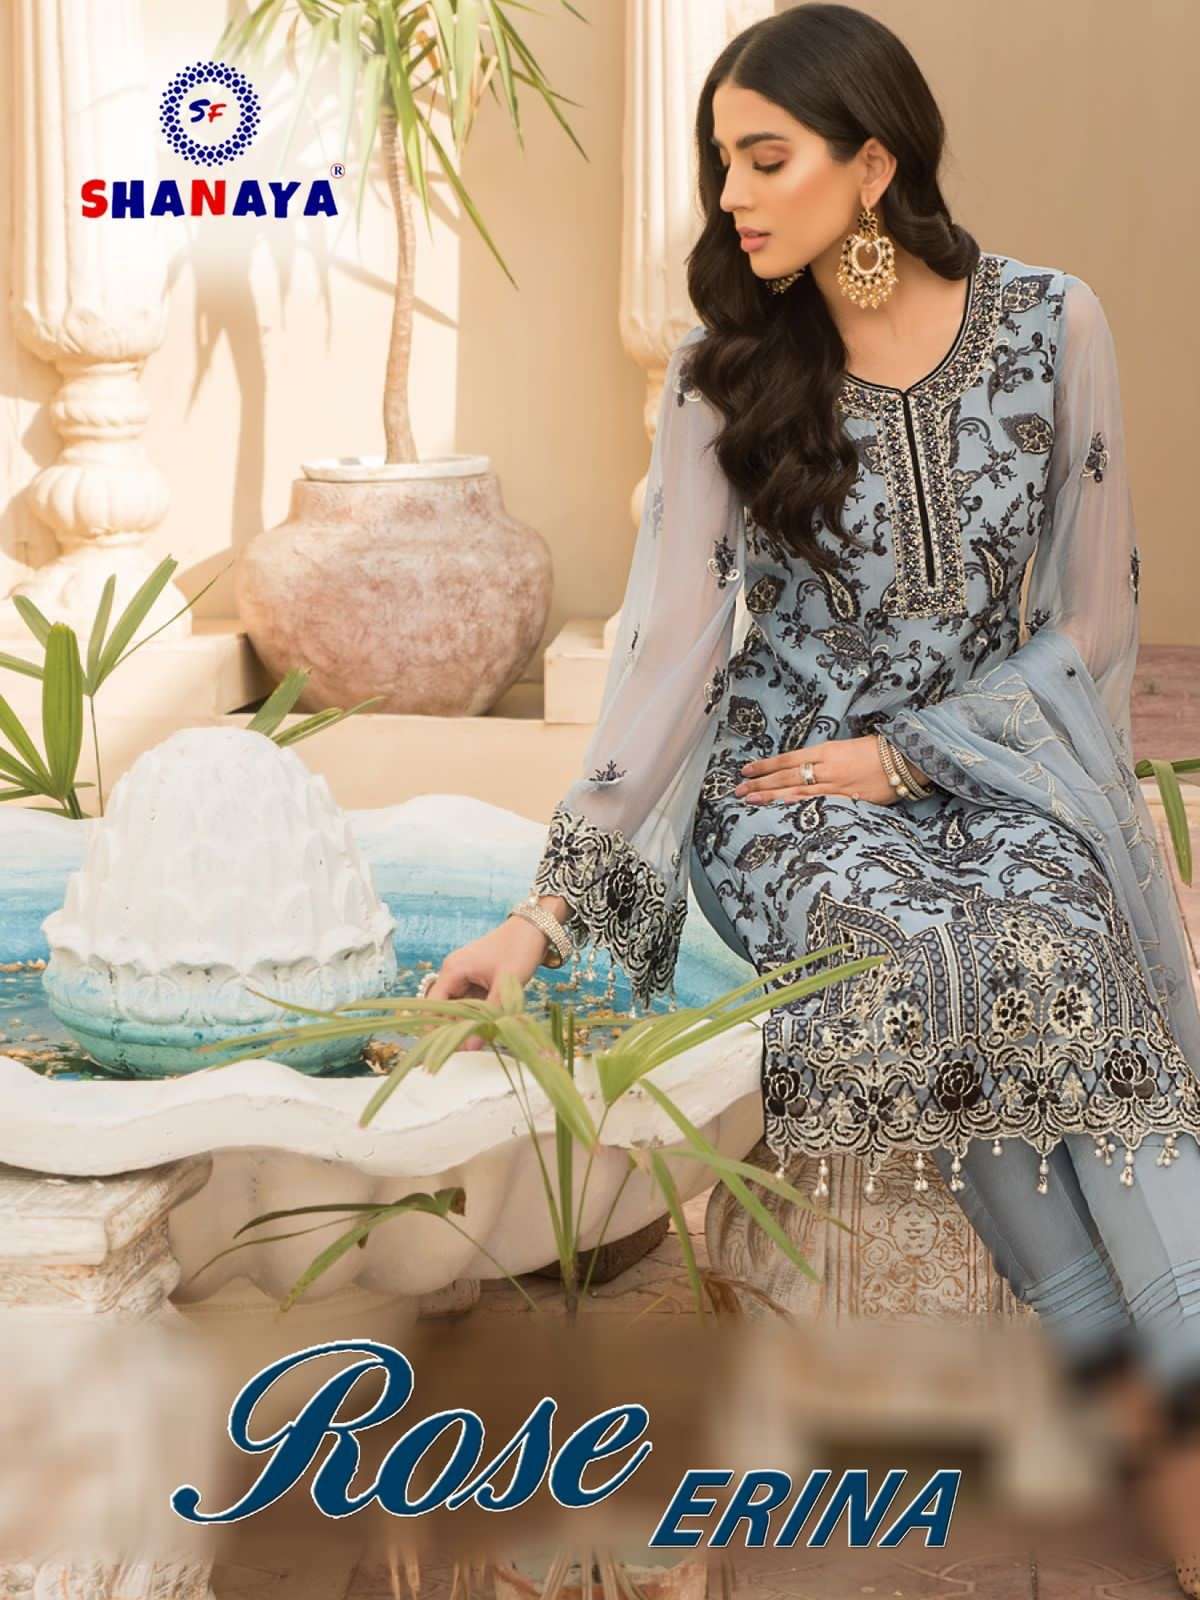 shanaya rose erina 14001-14003 series pakistani dresss wholesaler 